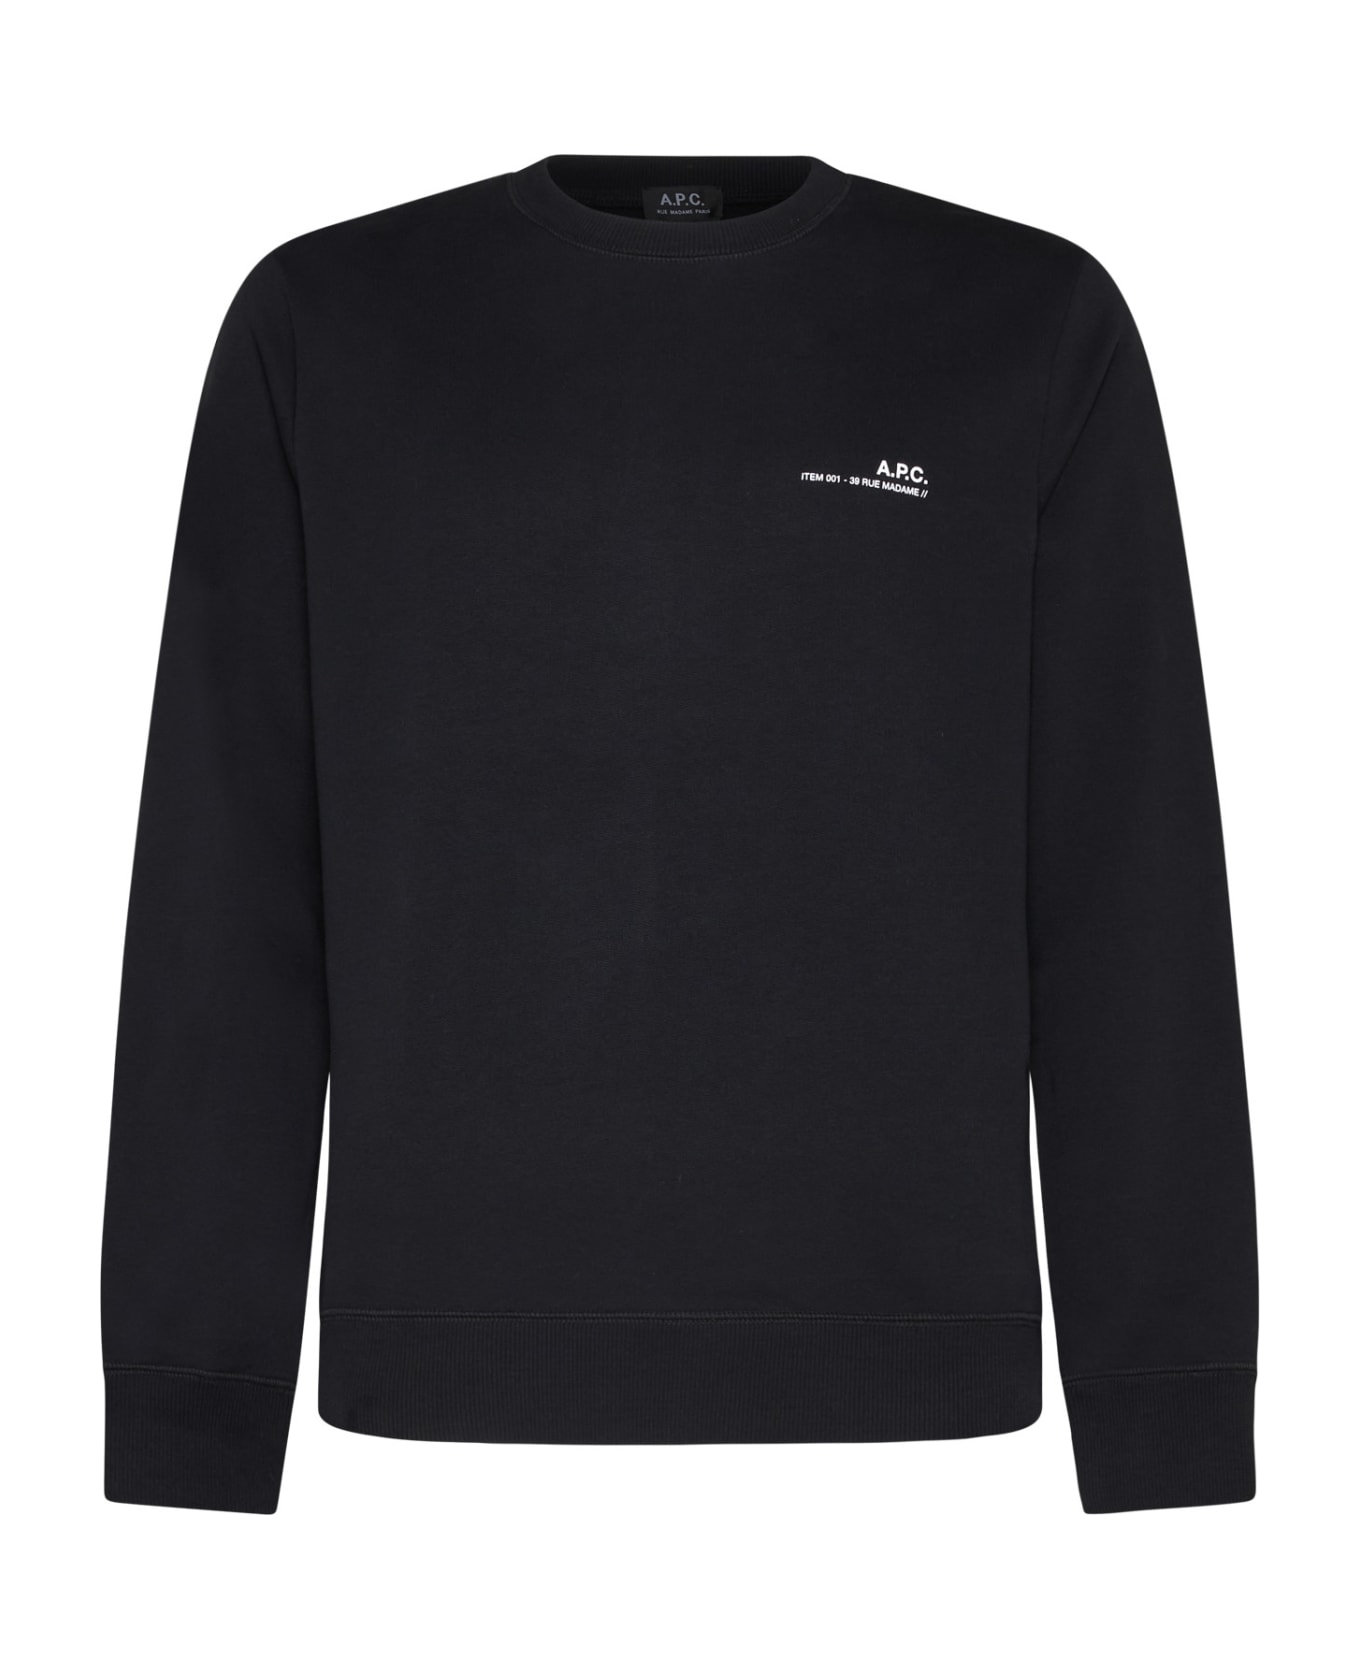 A.P.C. Sweatshirt With Logo - Black